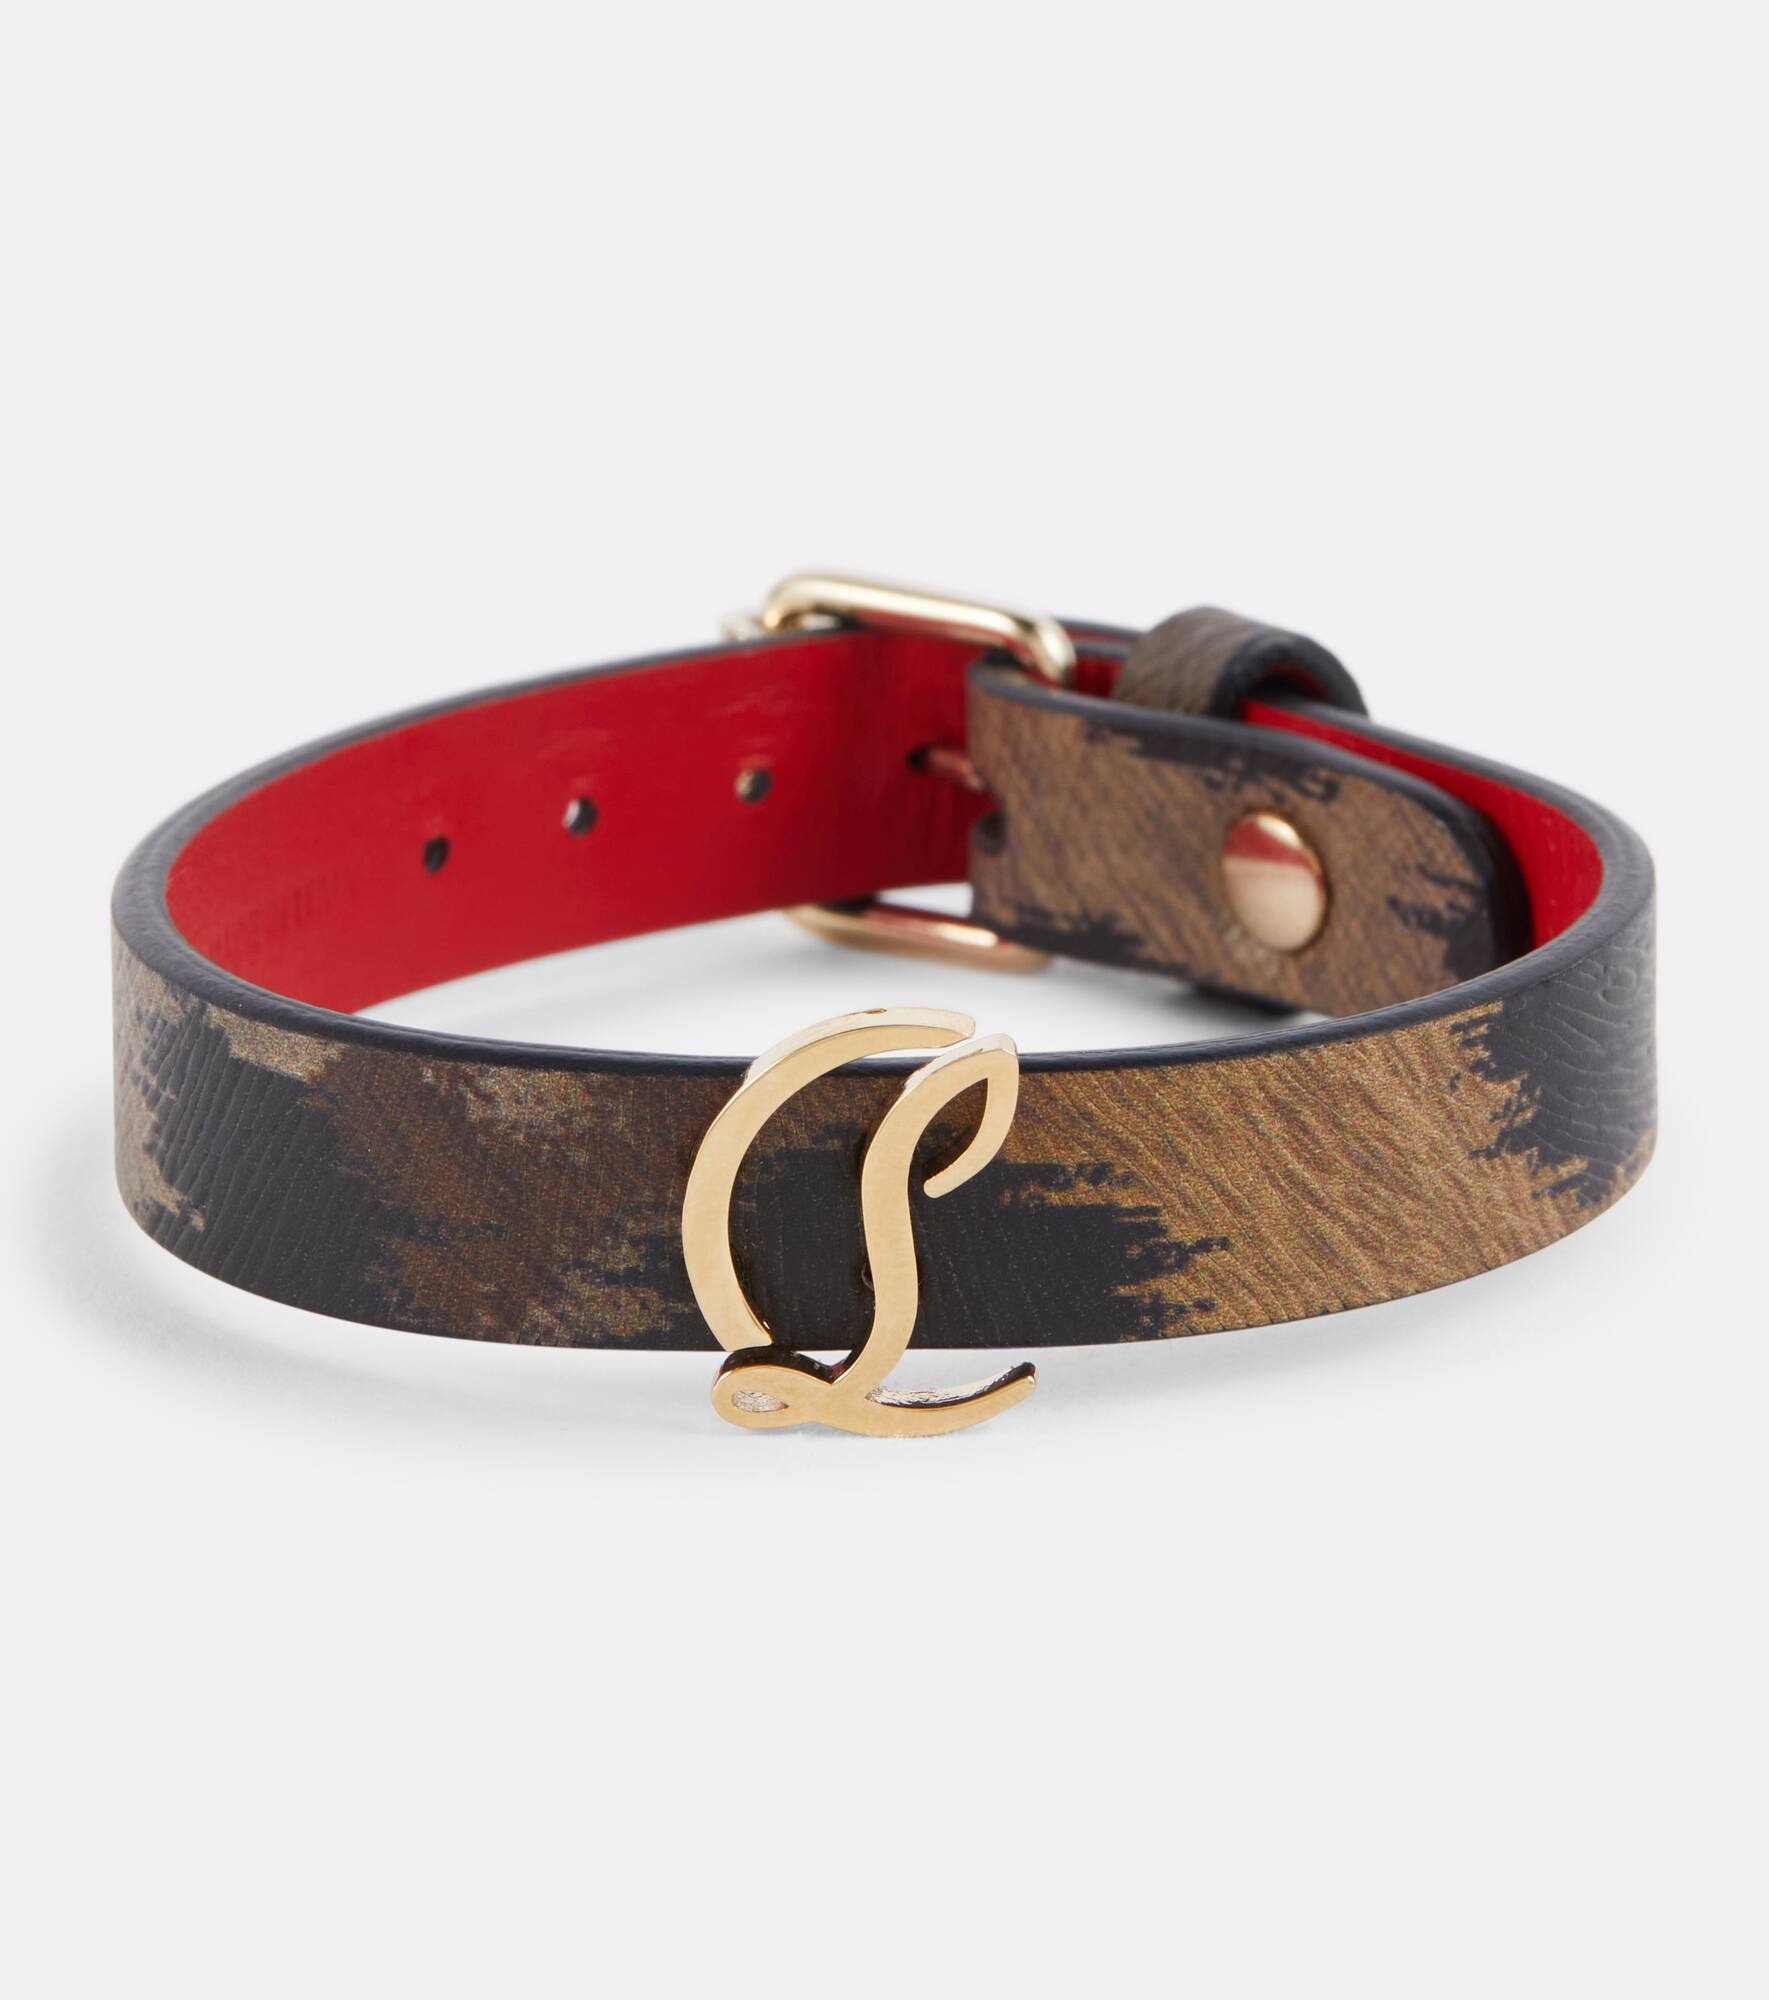 CL animal-print leather bracelet - 1